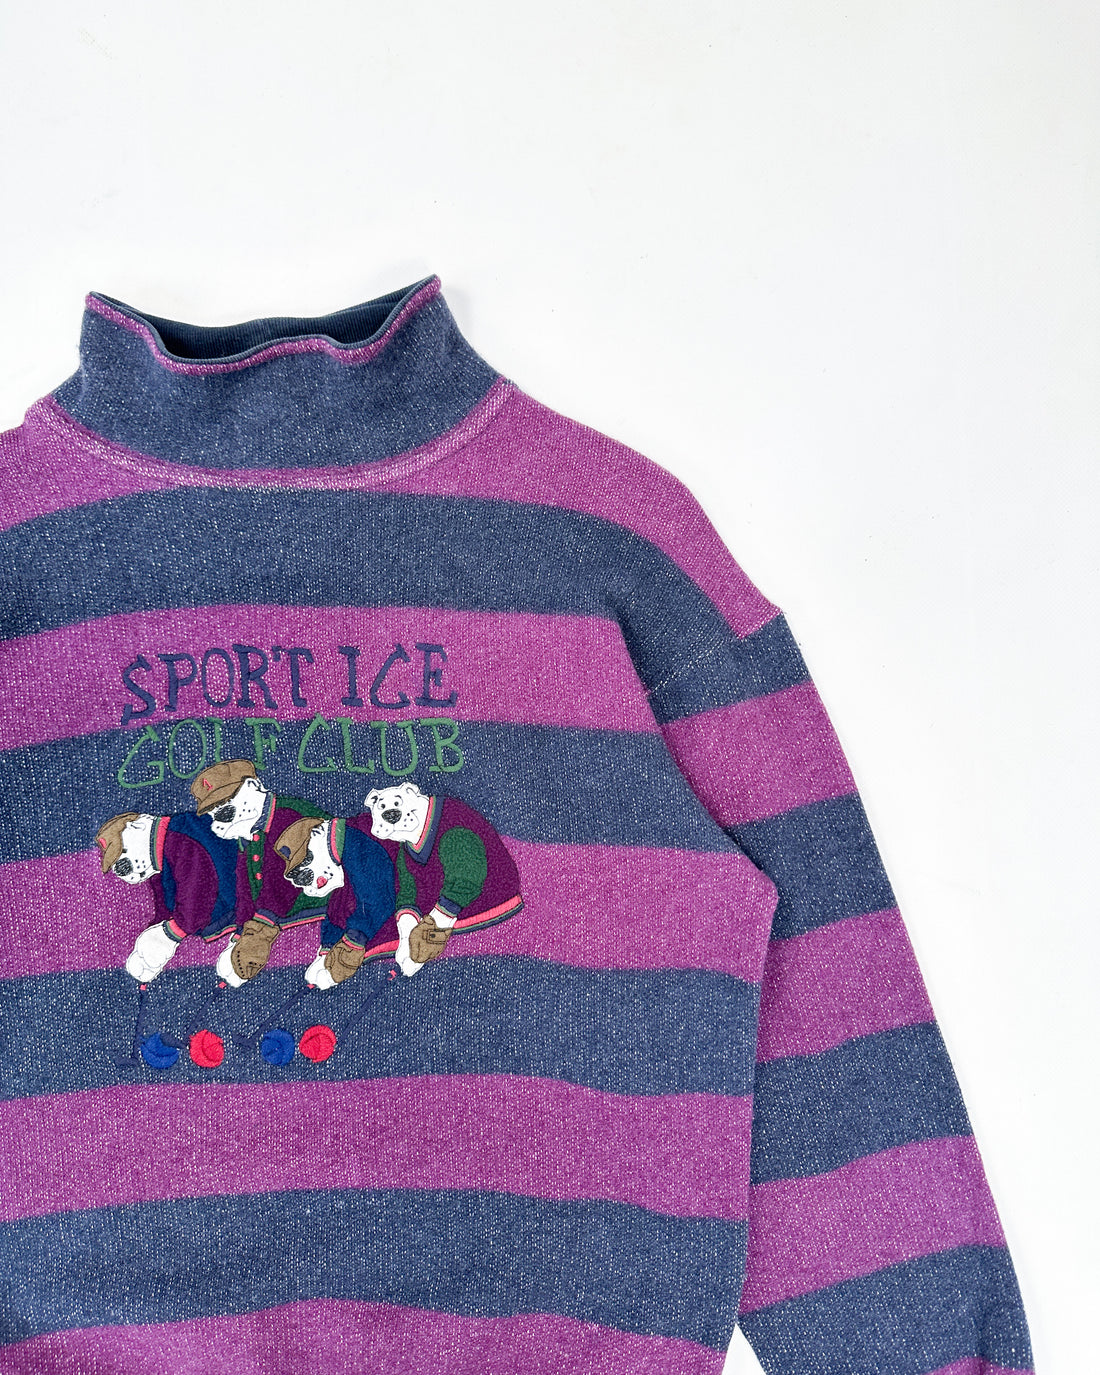 Sport Ice by Iceberg Golf Club Stripped Knit 1990's